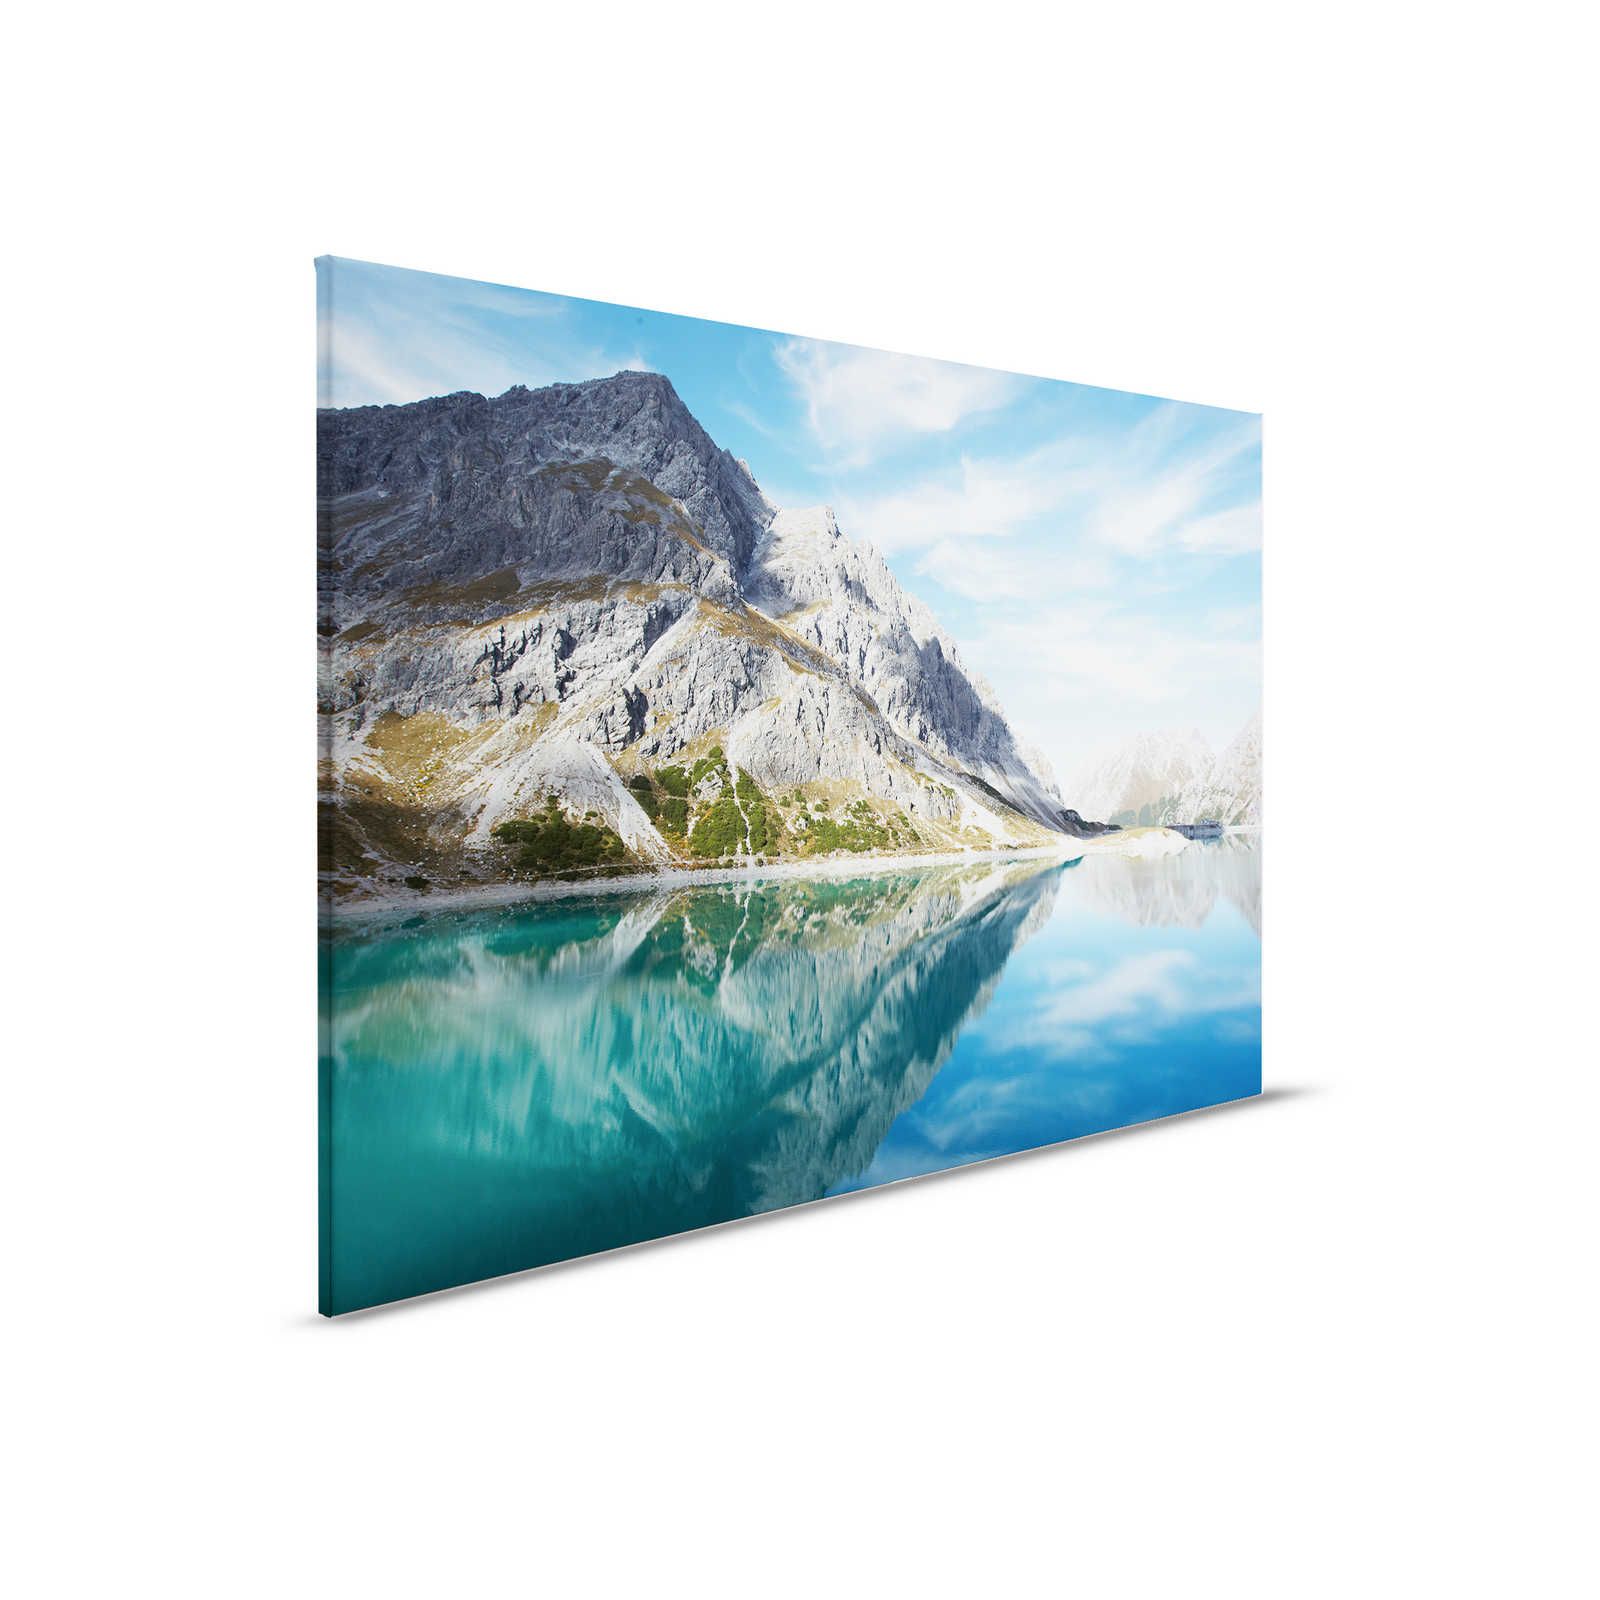         Bergsee klar - Leinwandbild mit natürlichem Bergpanorama – 0,90 m x 0,60 m
    